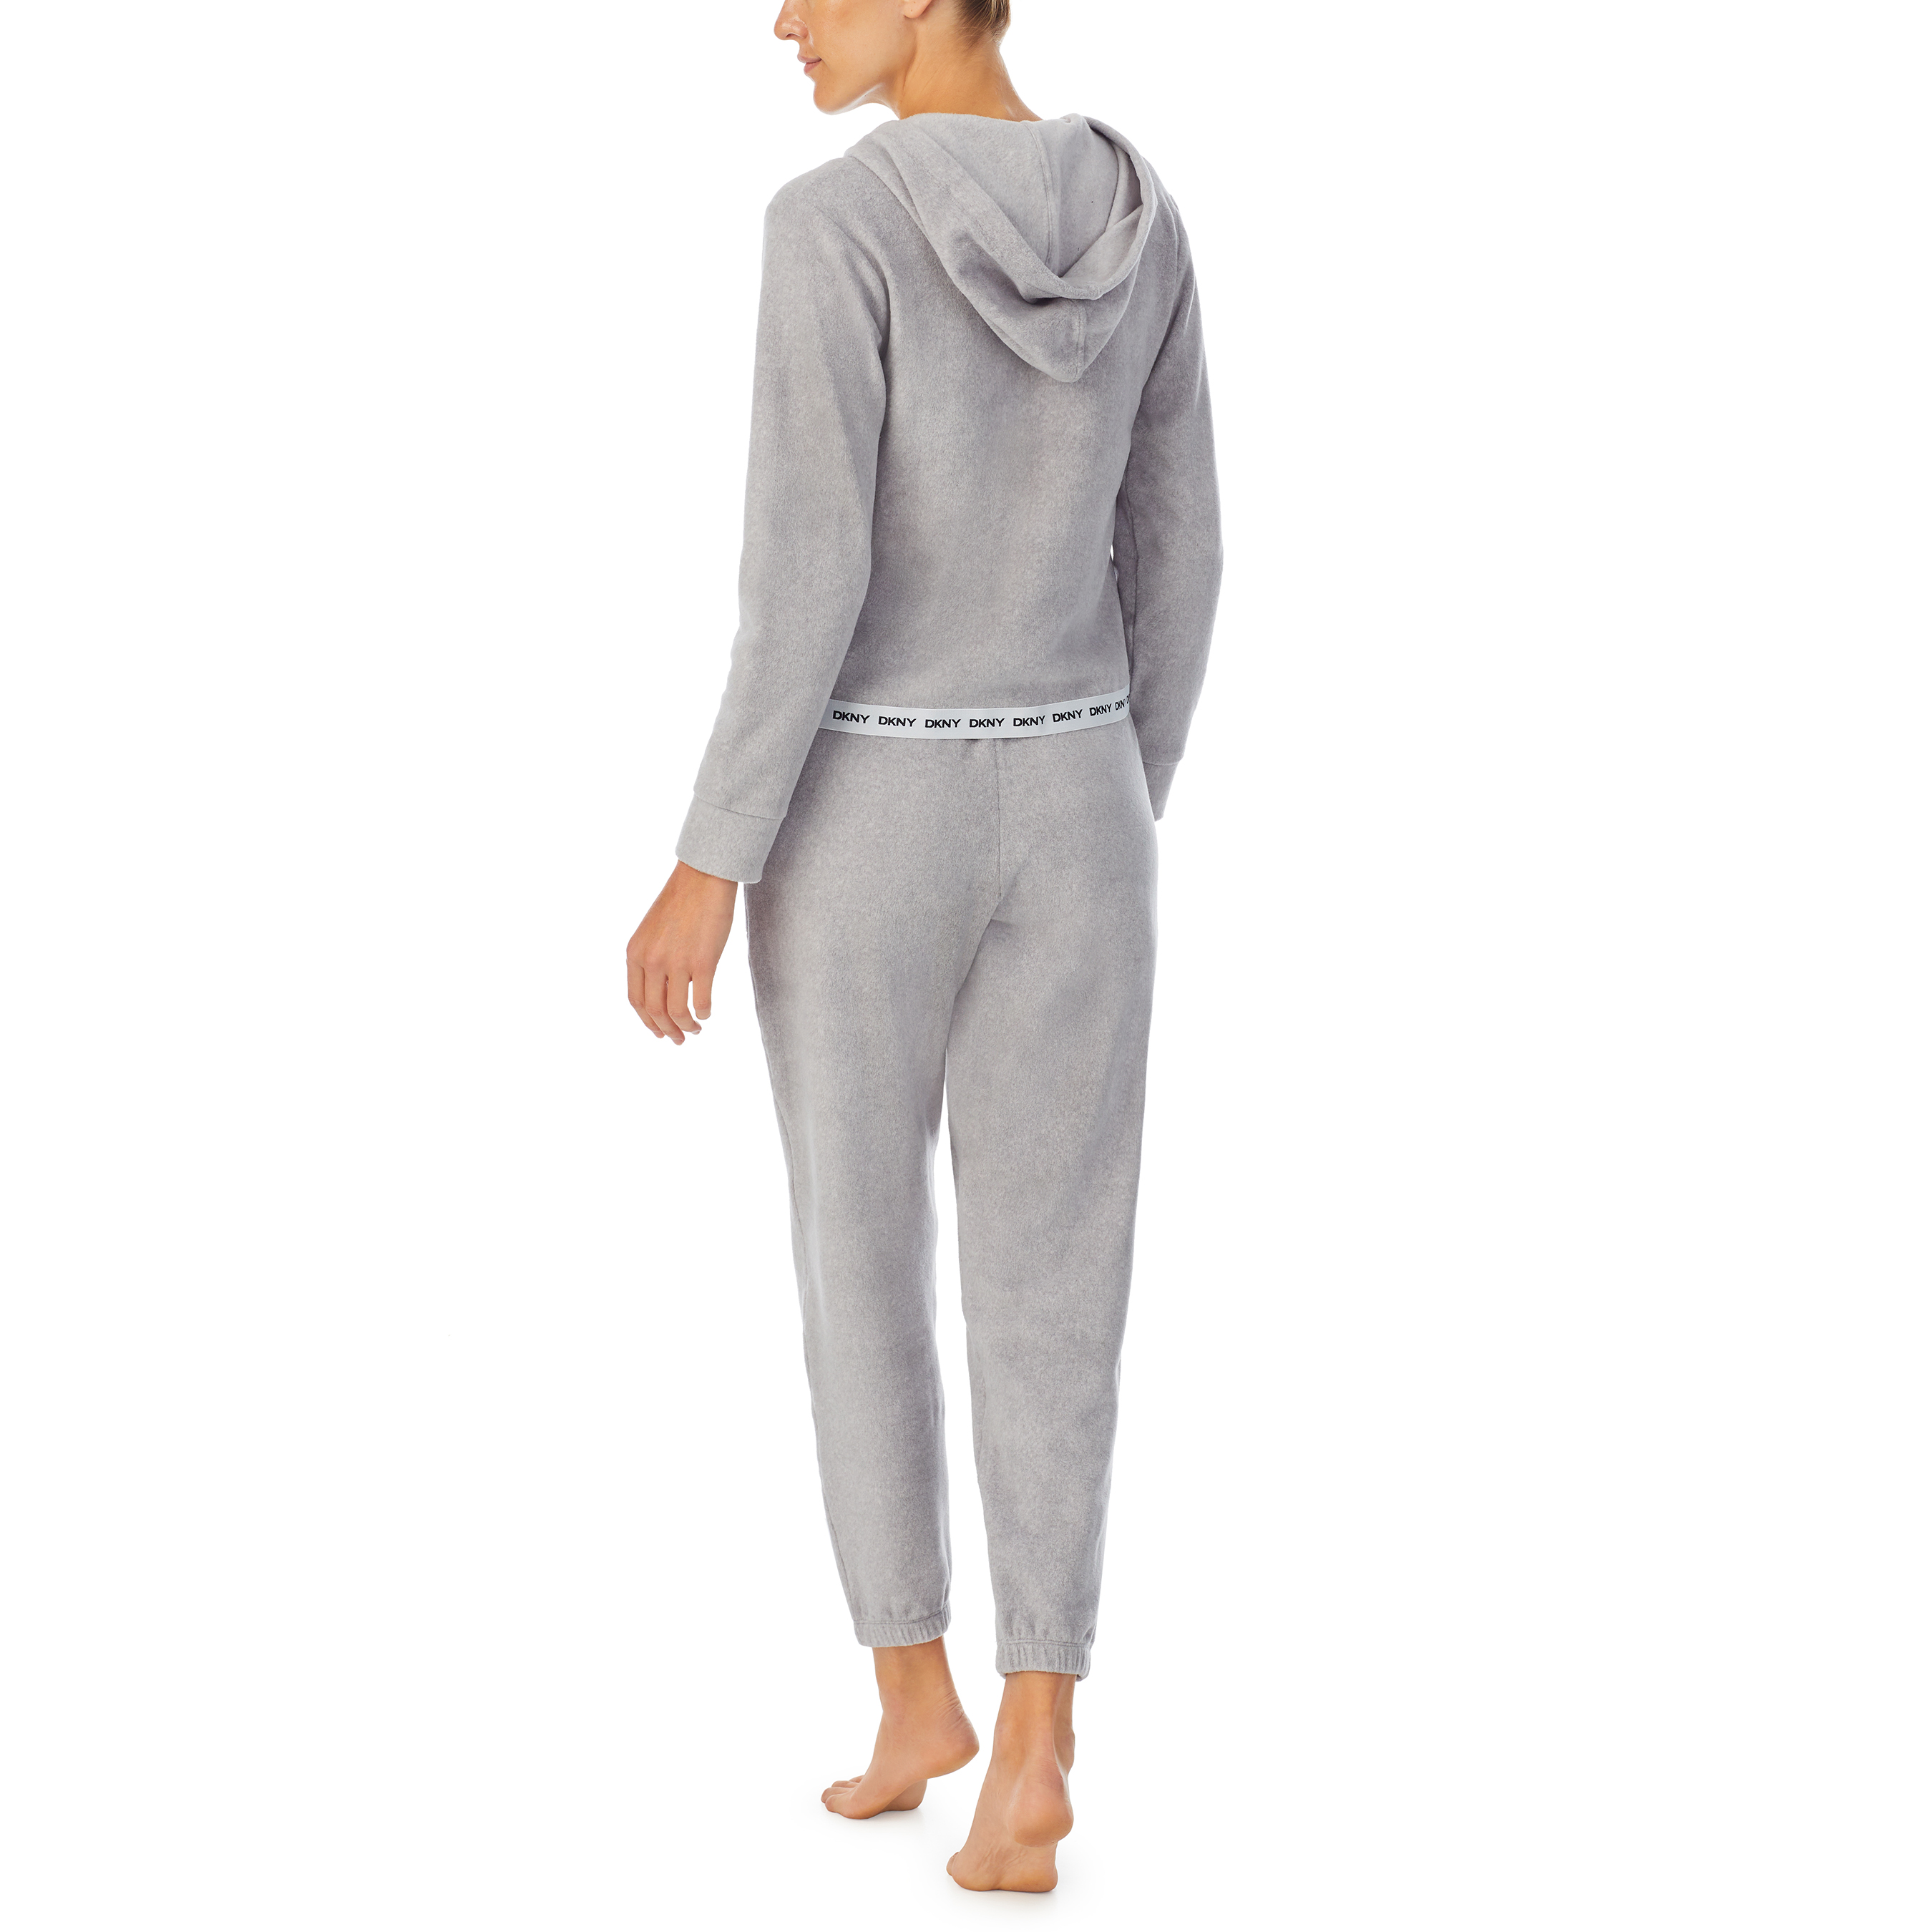 Work Hard-Chill Hard - Layer & Legging Sleep Set - Grey - Hthr, DKNY-2022595-Grey